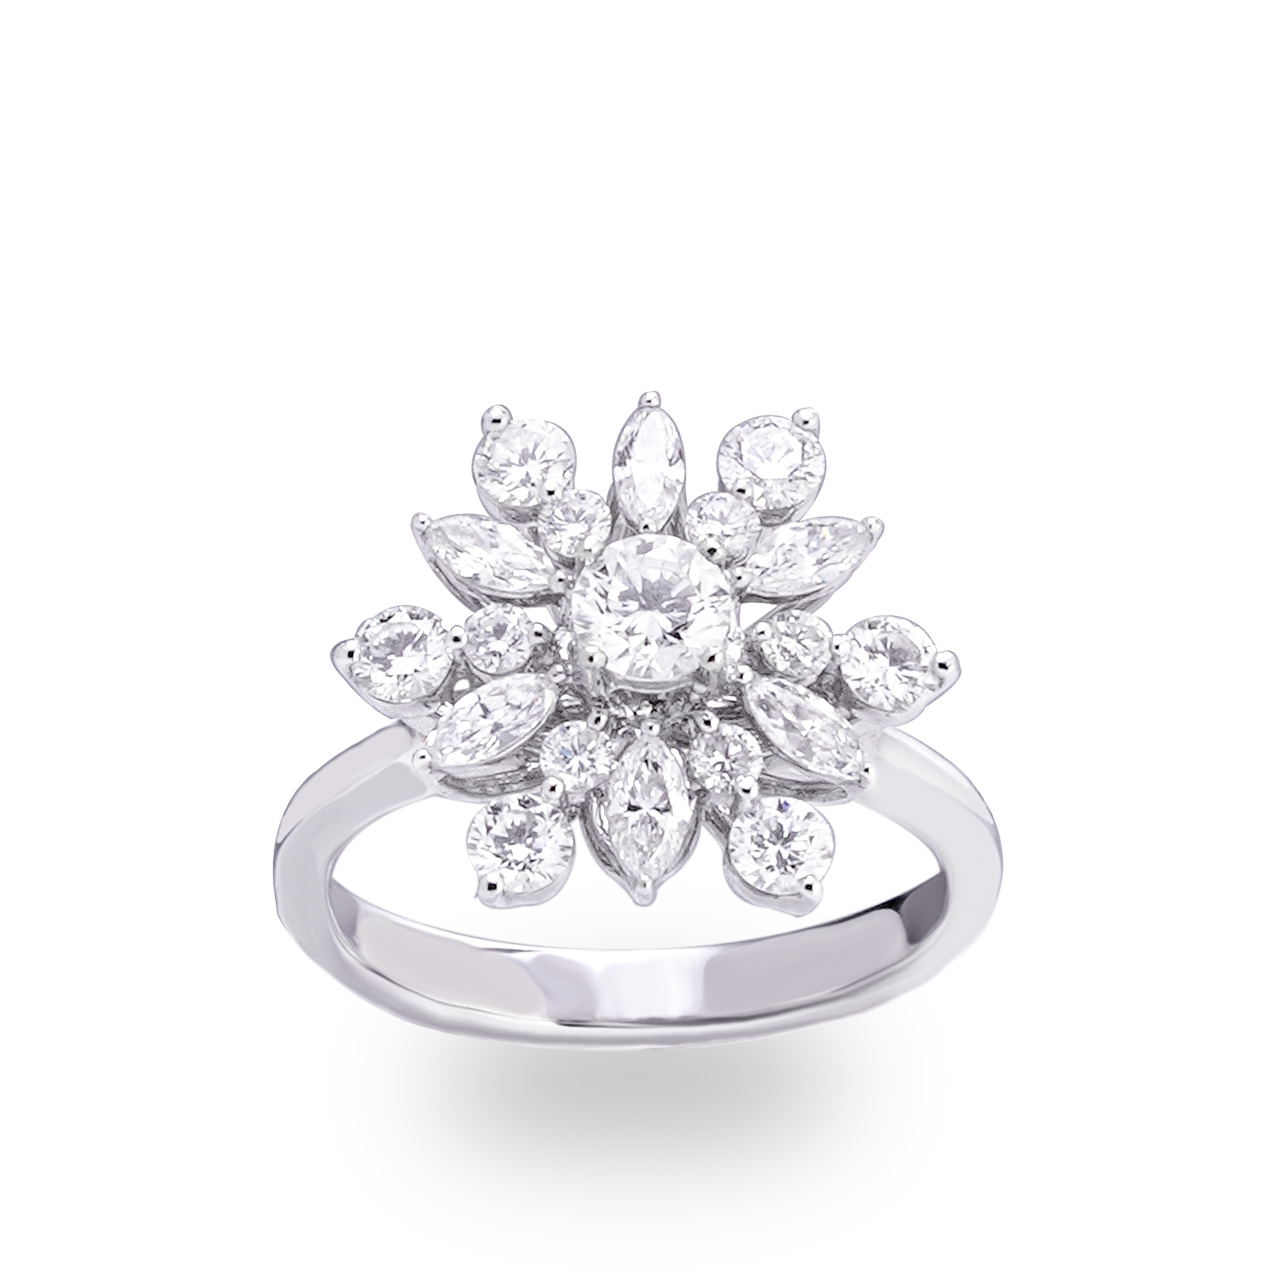 Snowflake Diamond Ring | Mirage Jewelry - Your Custom Jewelry